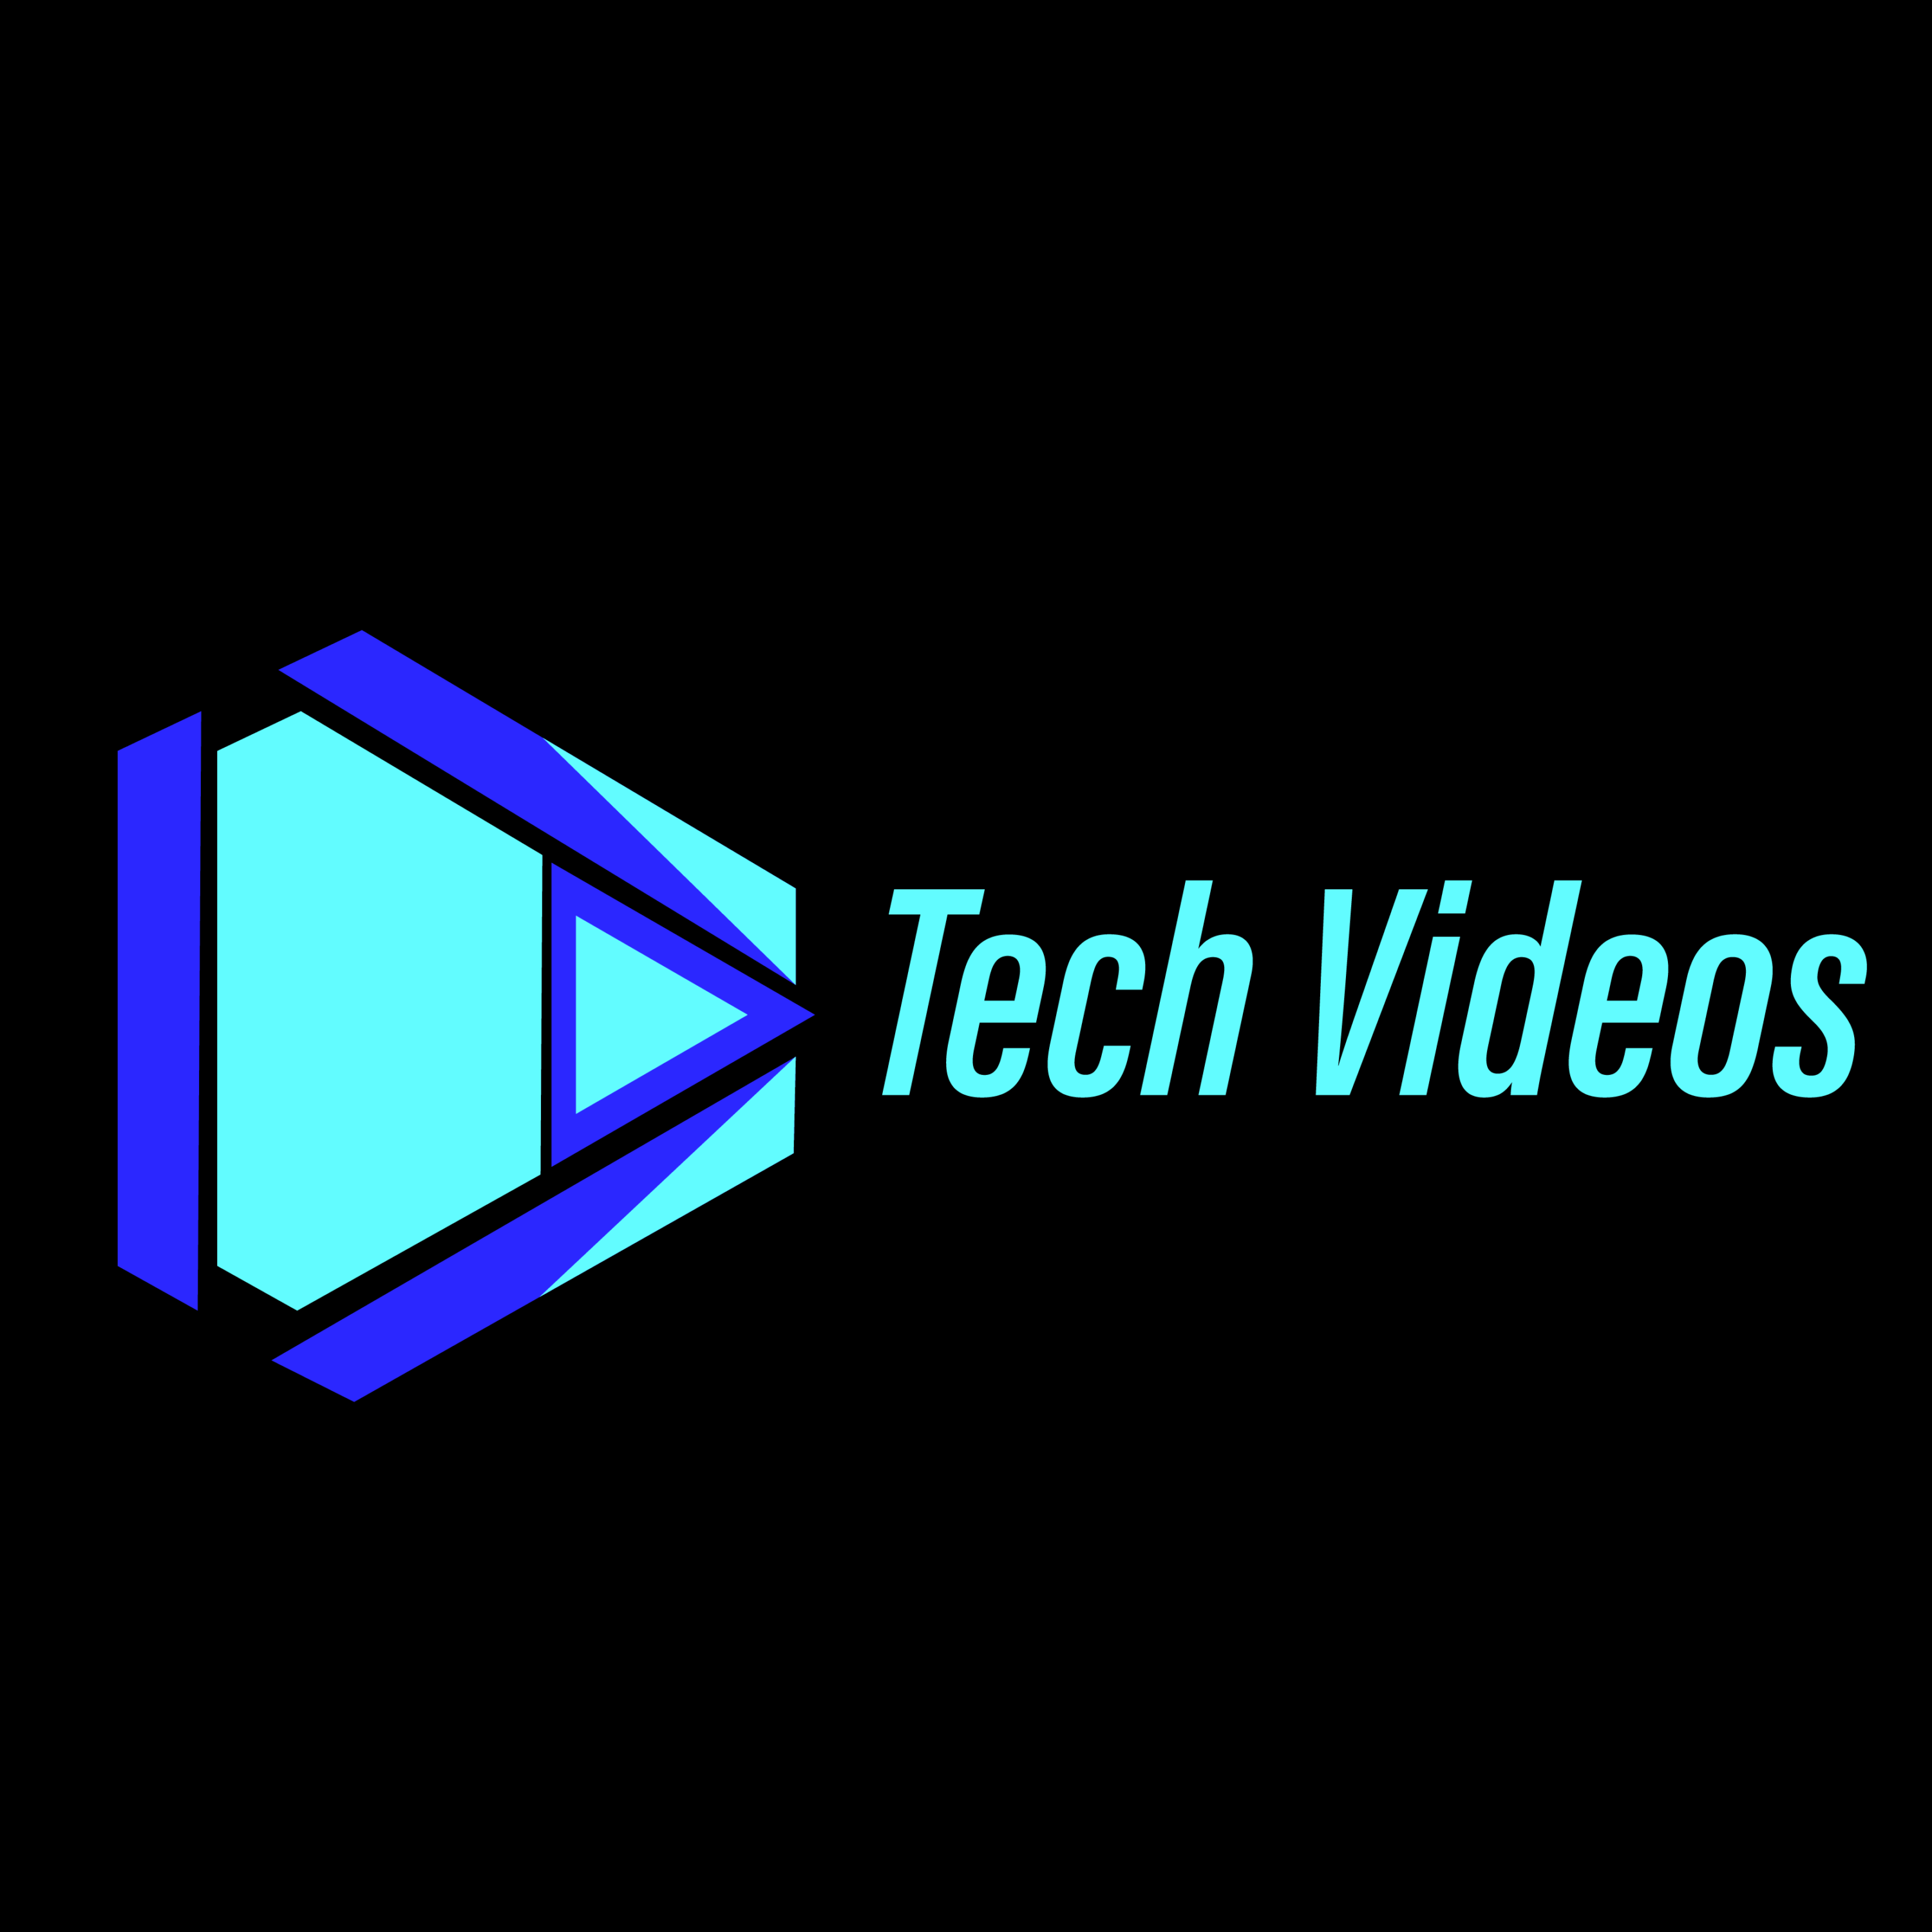 Video Icon Logo, blue logo on dark background.